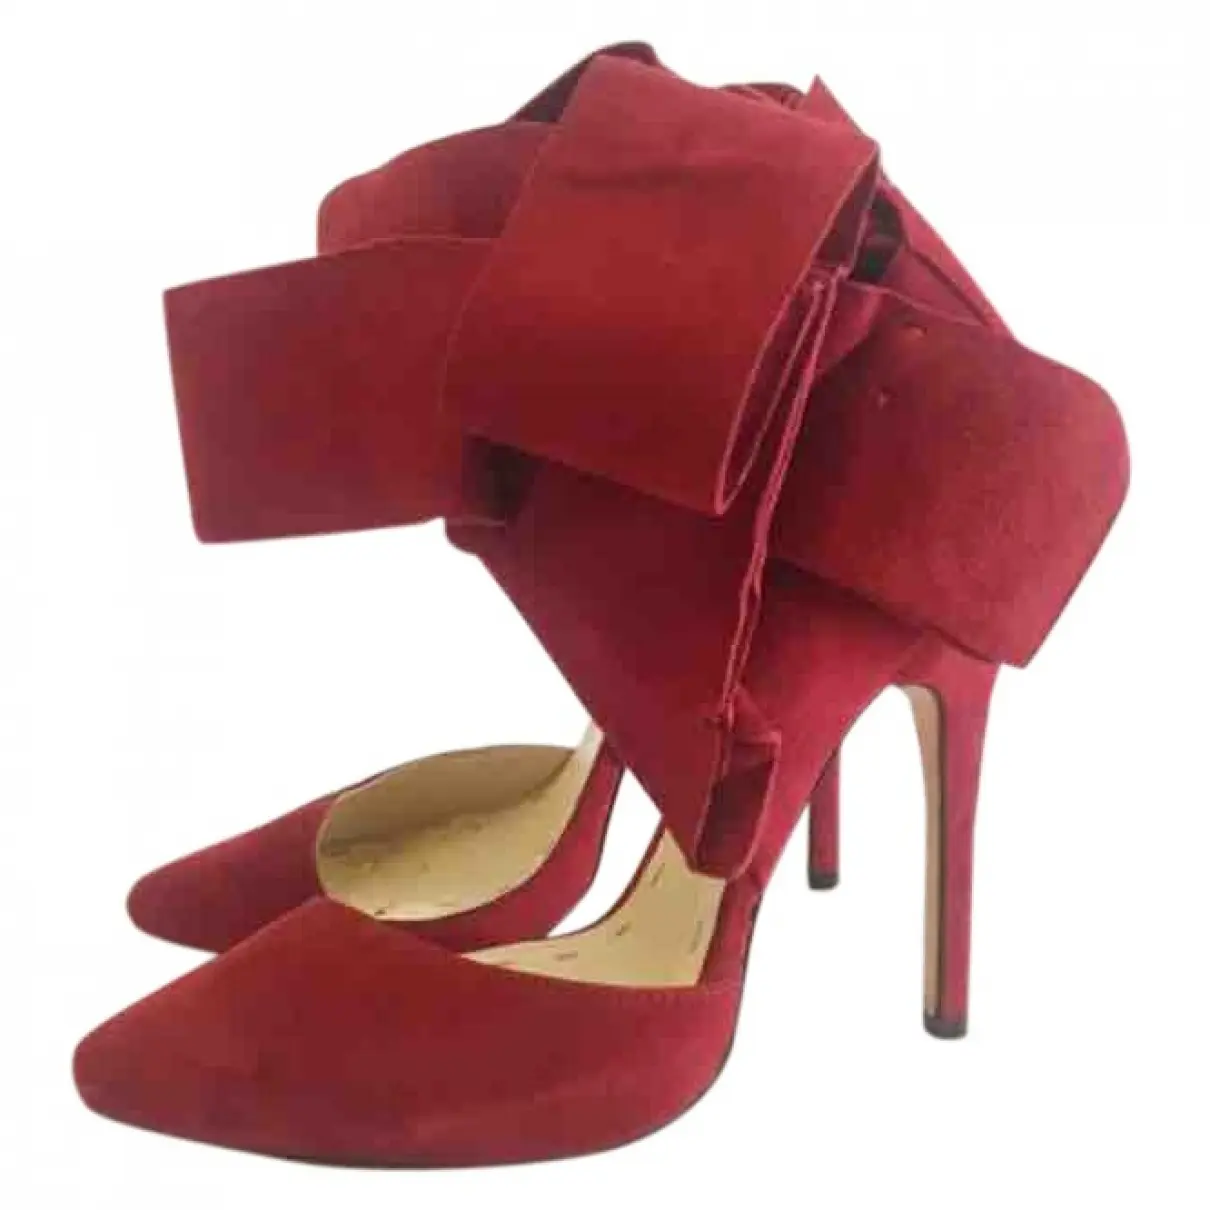 Leather heels Aminah Abdul Jillil